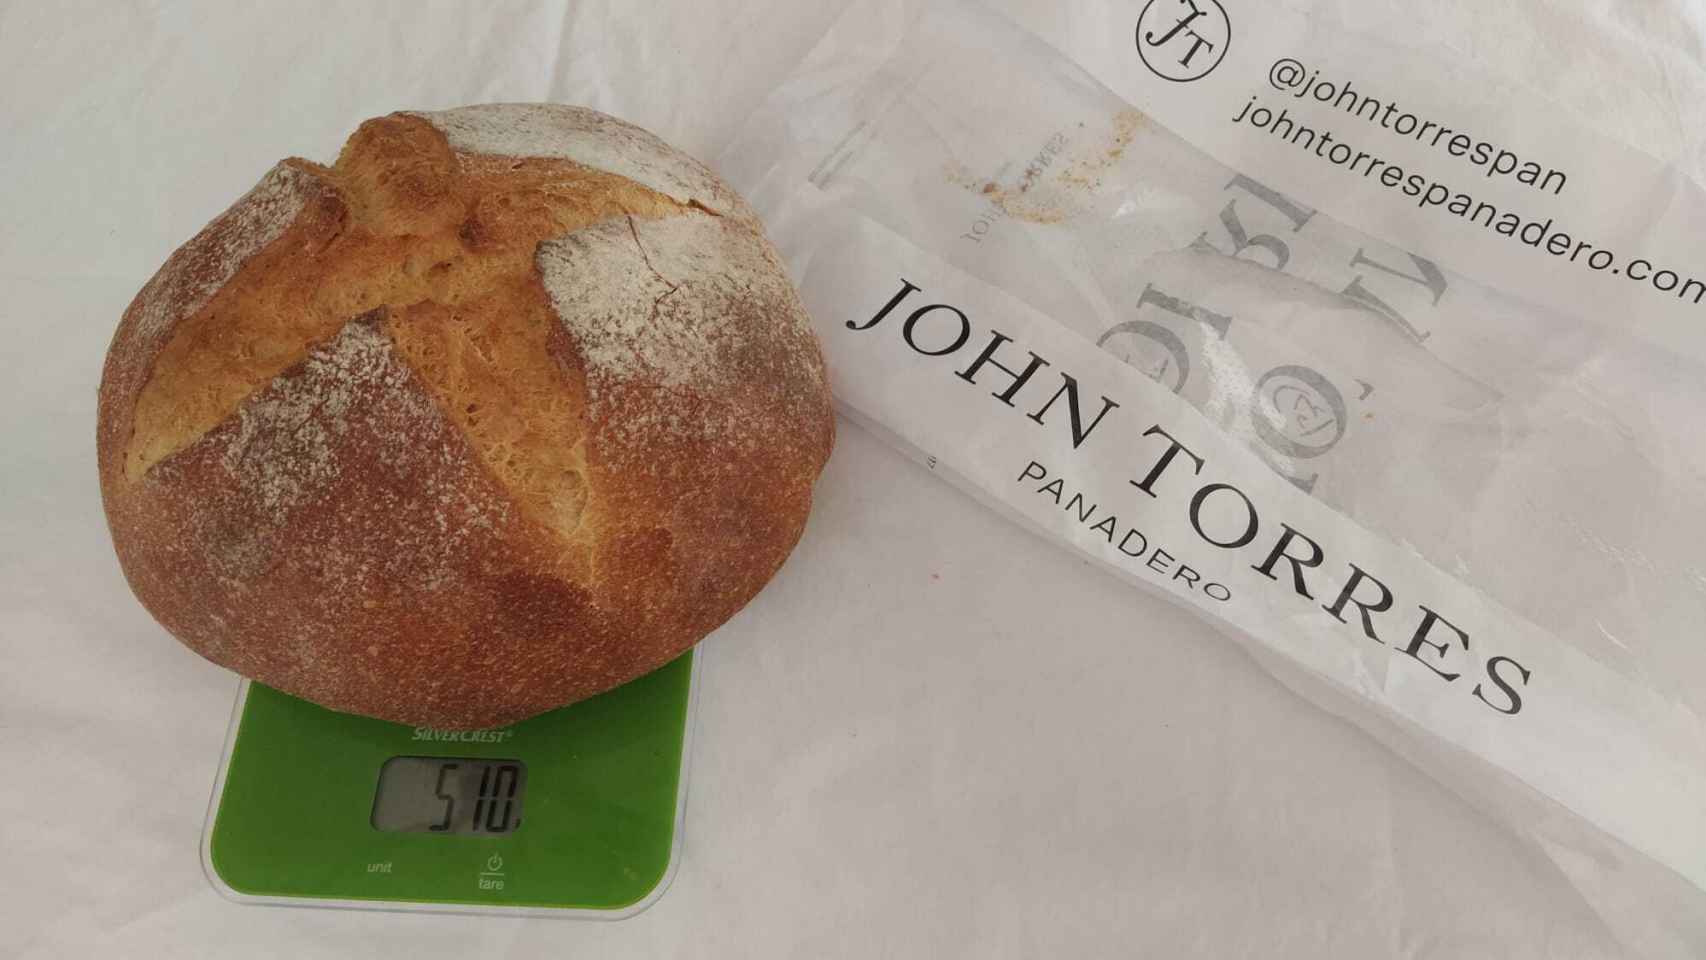 La hogaza de trigo de John Torres Panadero.